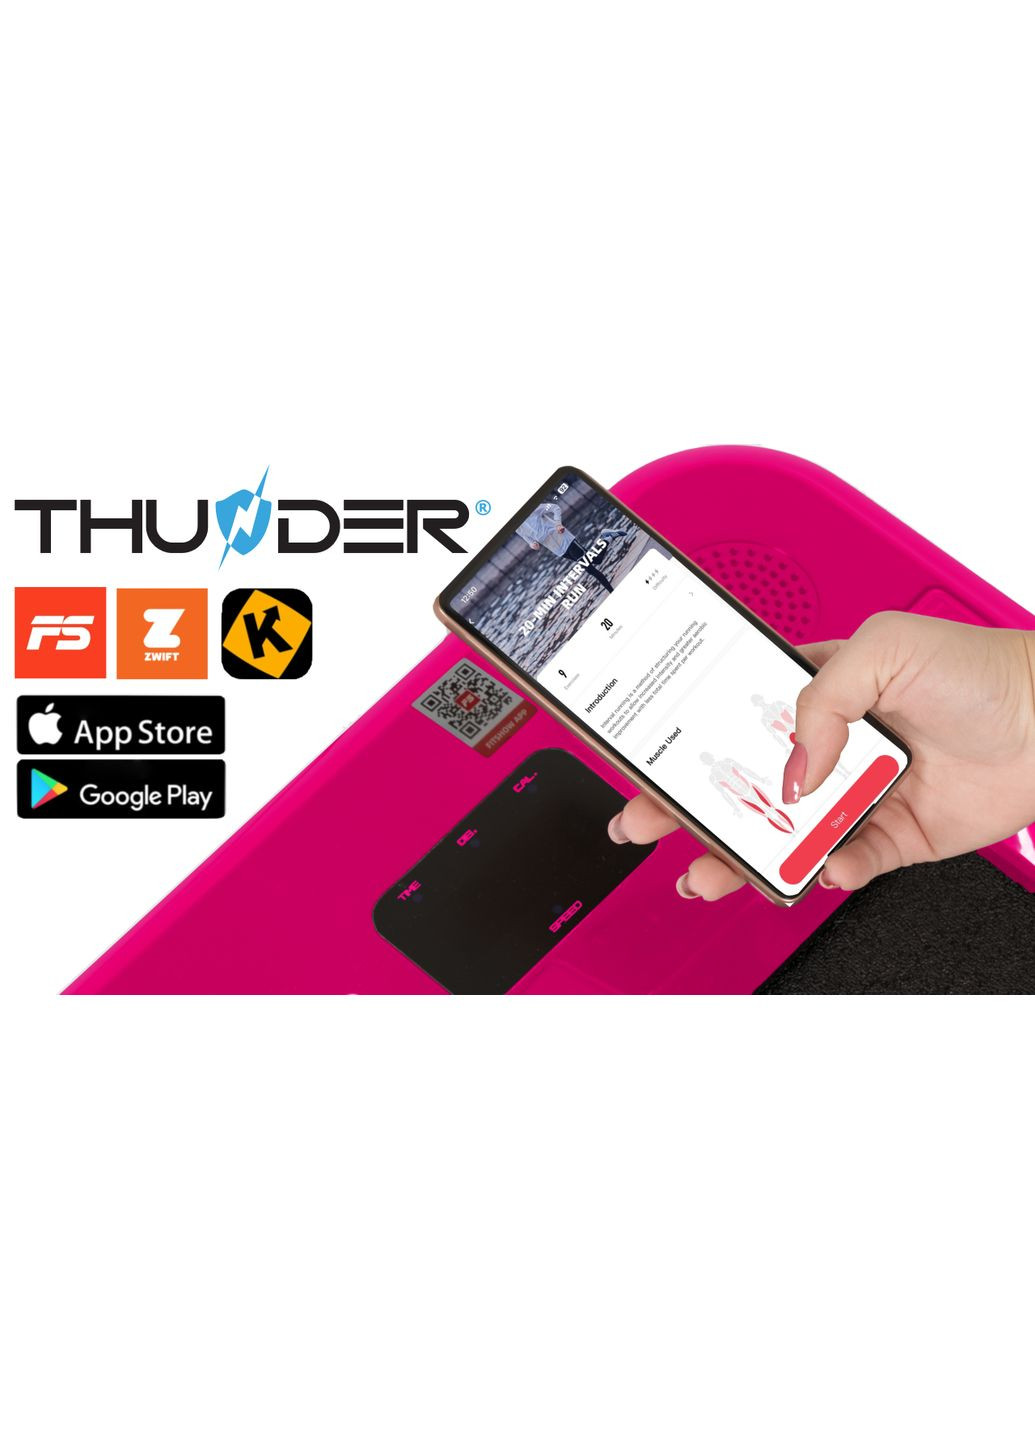 Тренажер Thunder race-pink (281326730)